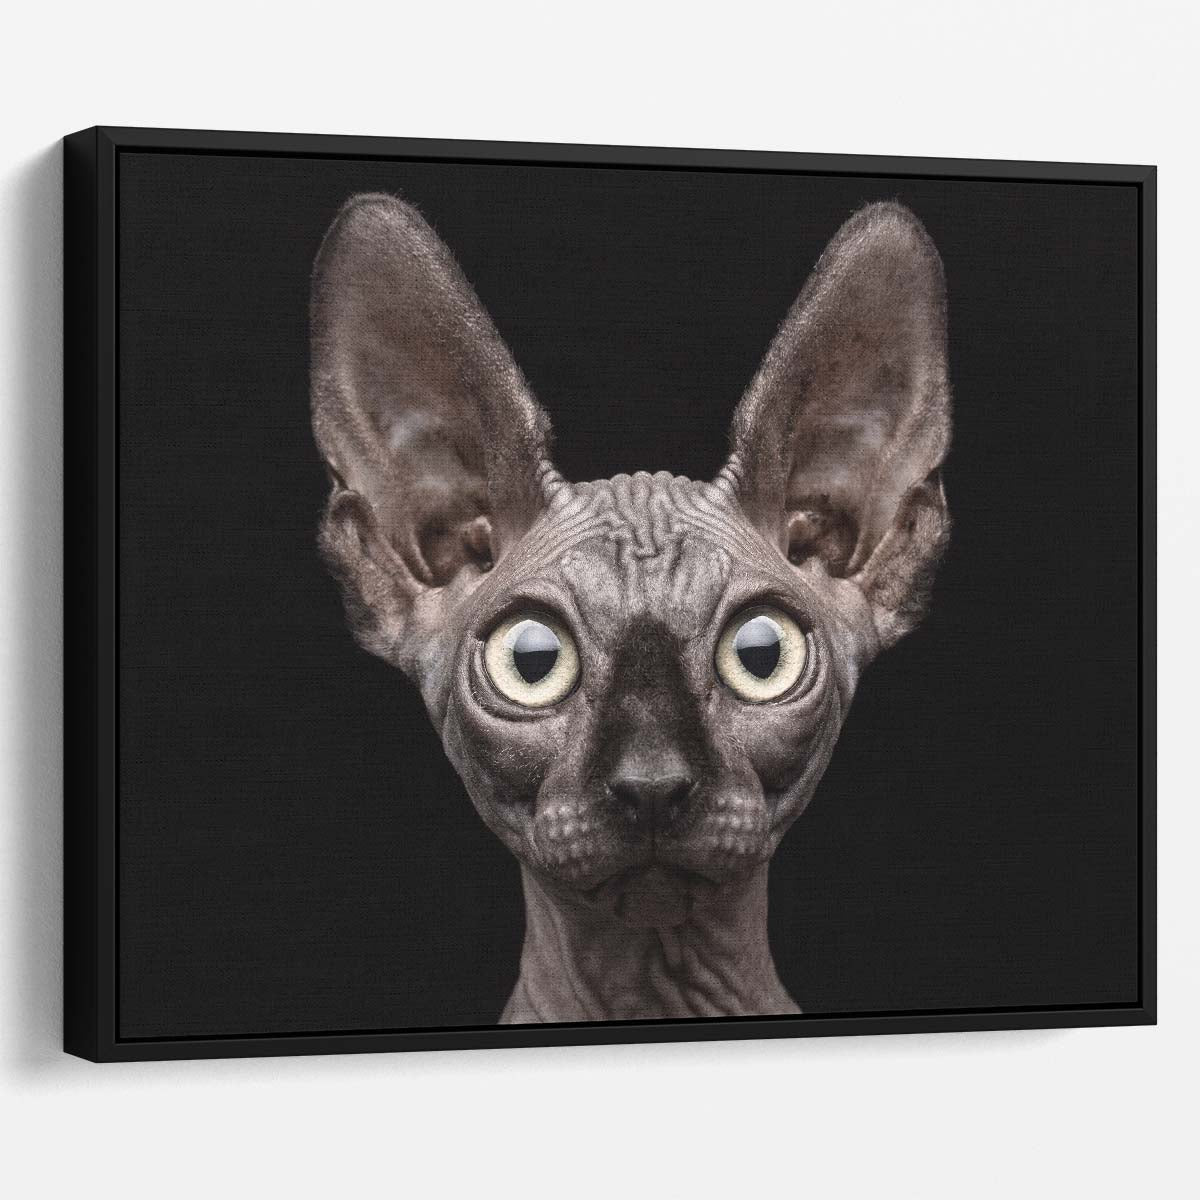 Sphynx Cat Portrait Surprised Gaze, Studio Shot Wall Art